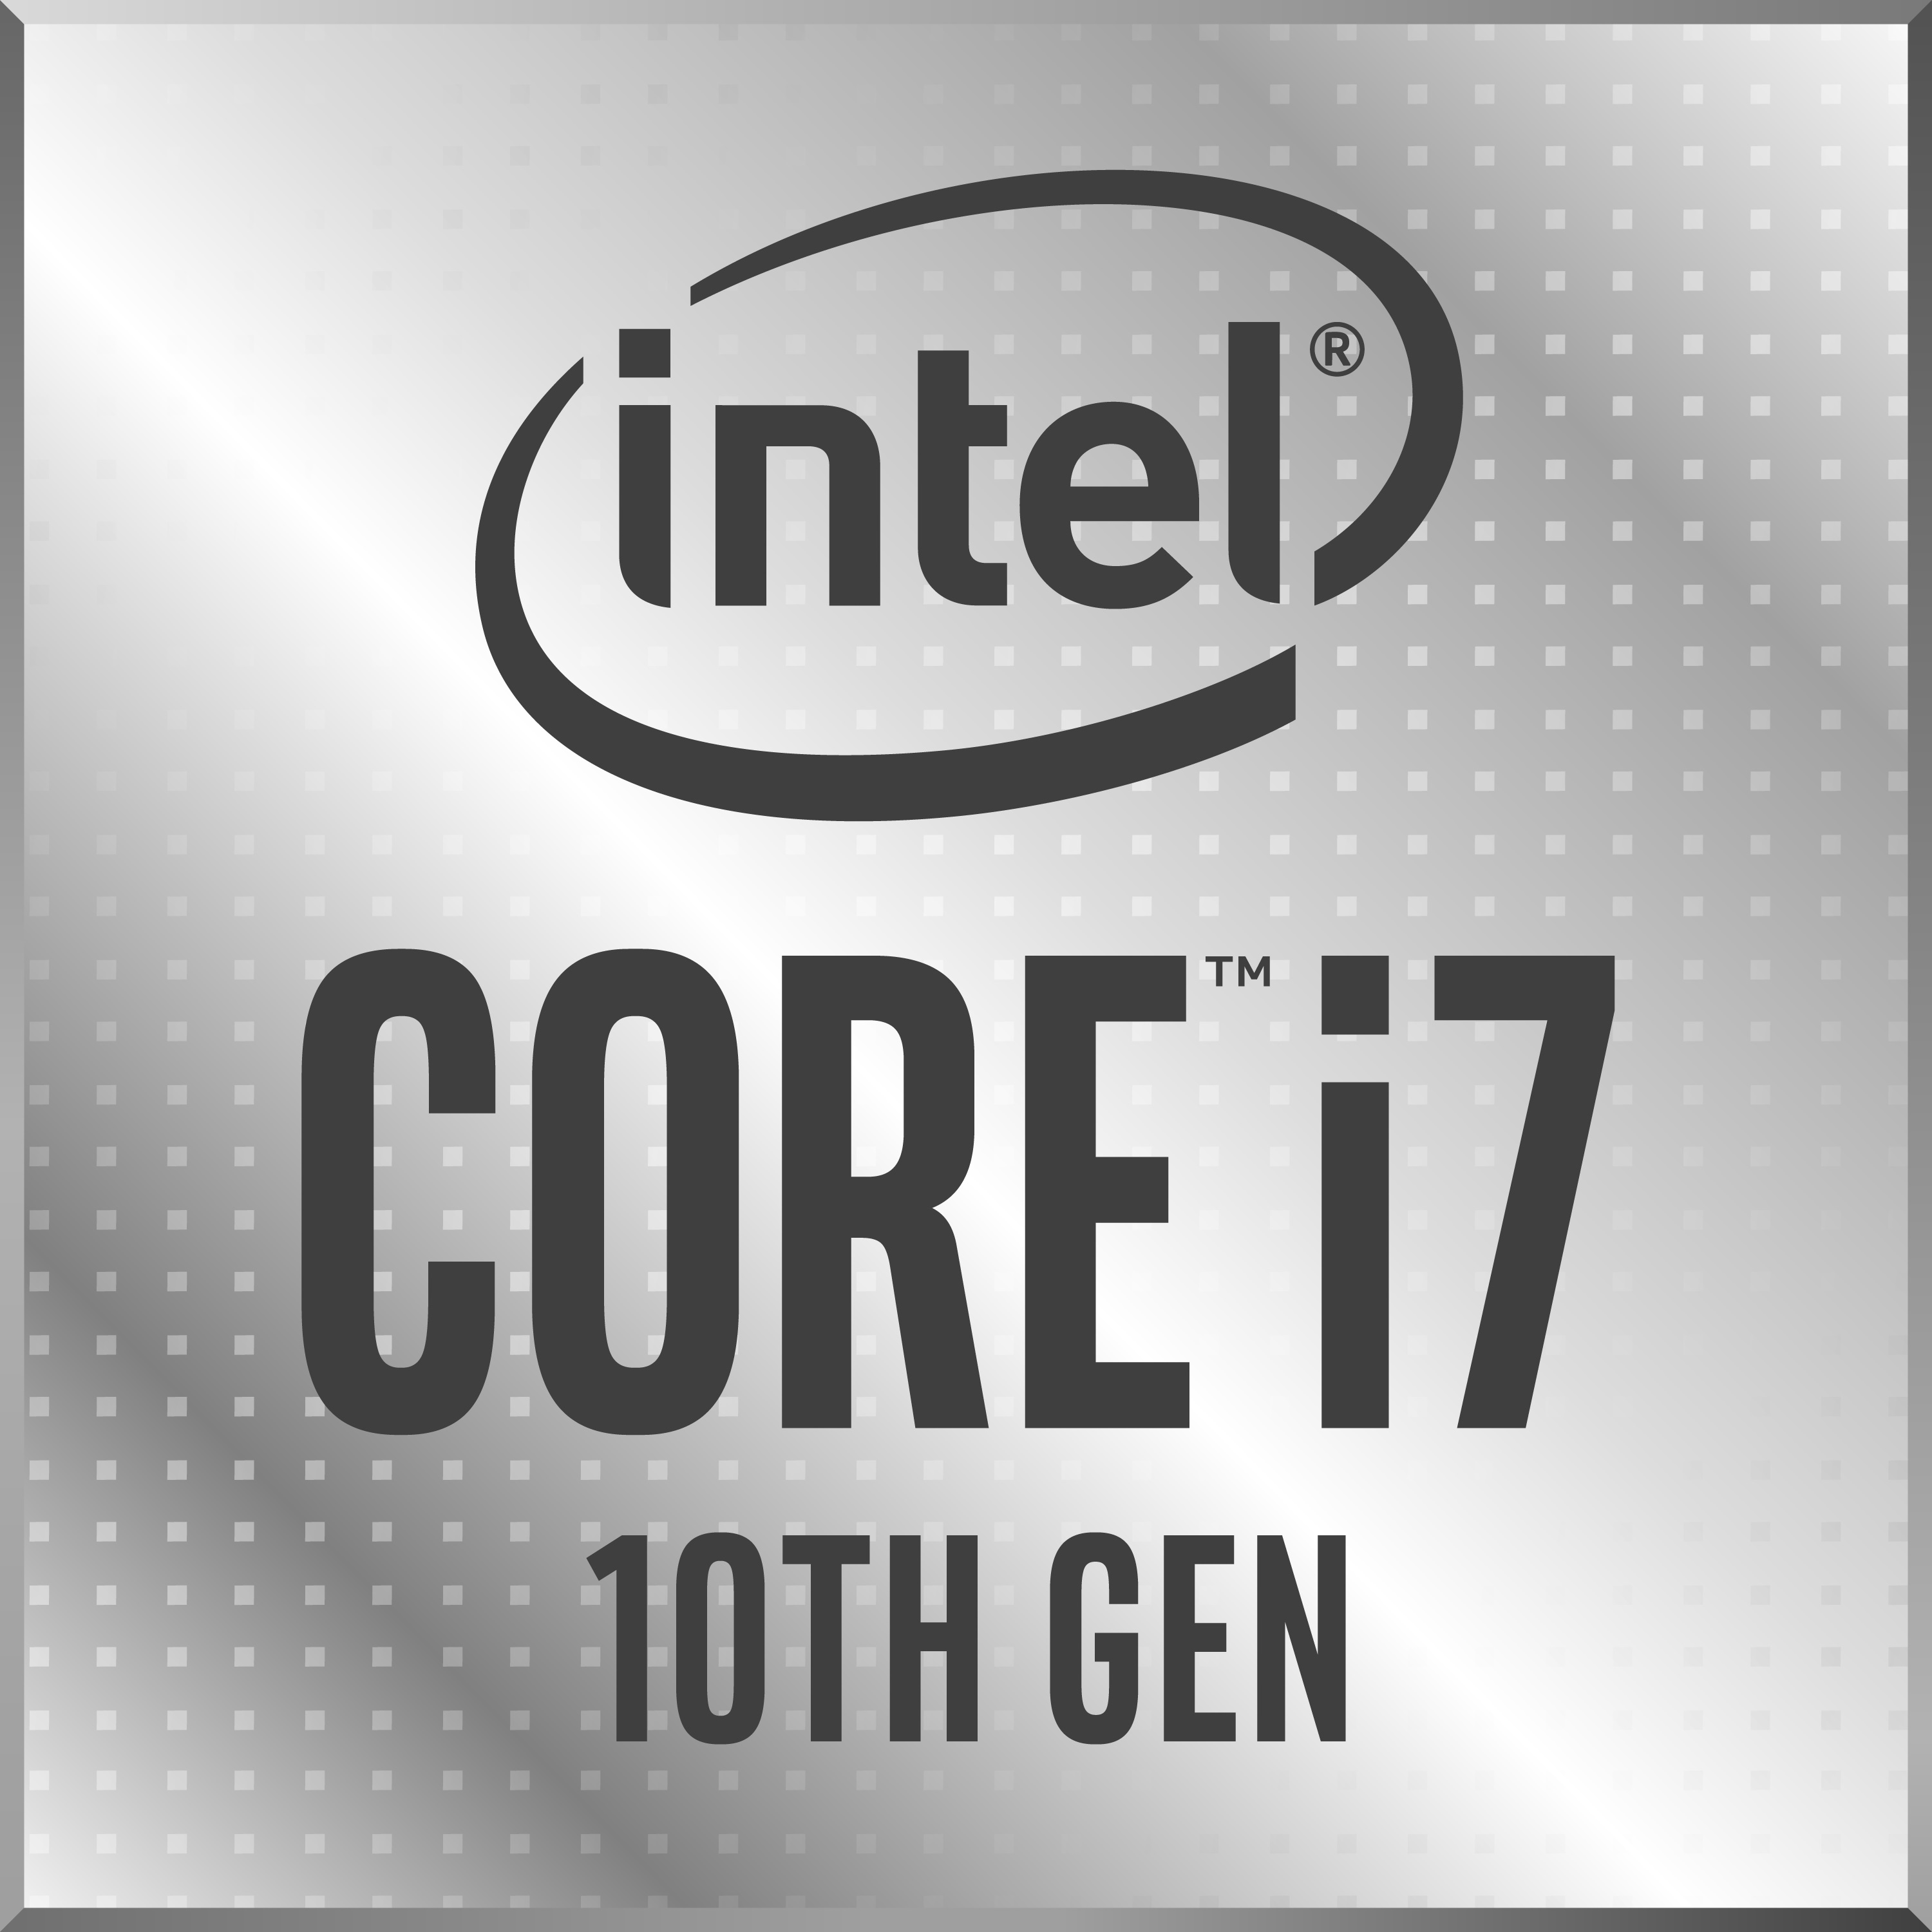 Algemeen Collega Probleem Intel Core i7-1065G7 Laptop Processor (Ice Lake) - NotebookCheck.net Tech